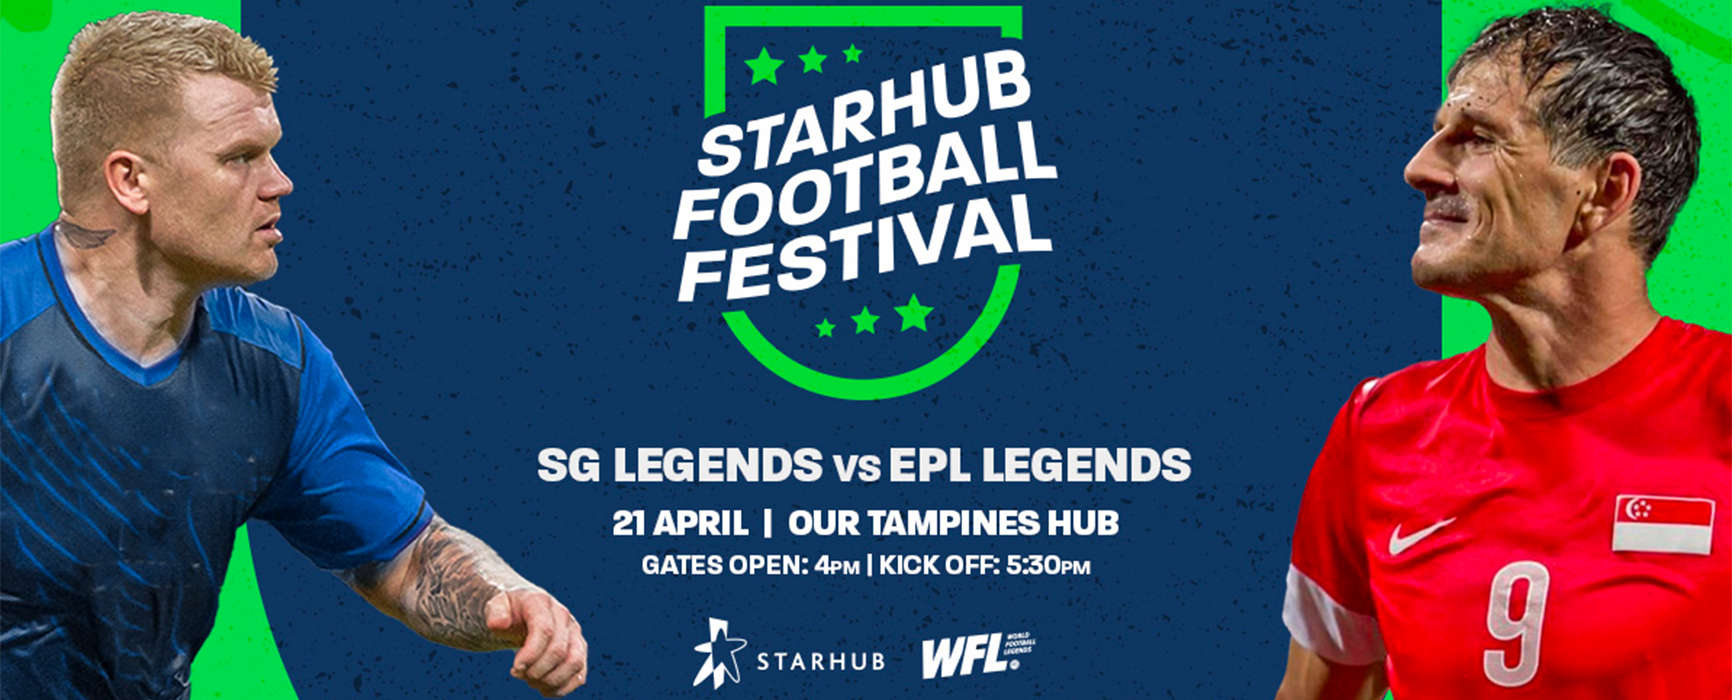 Starhub Football Festival